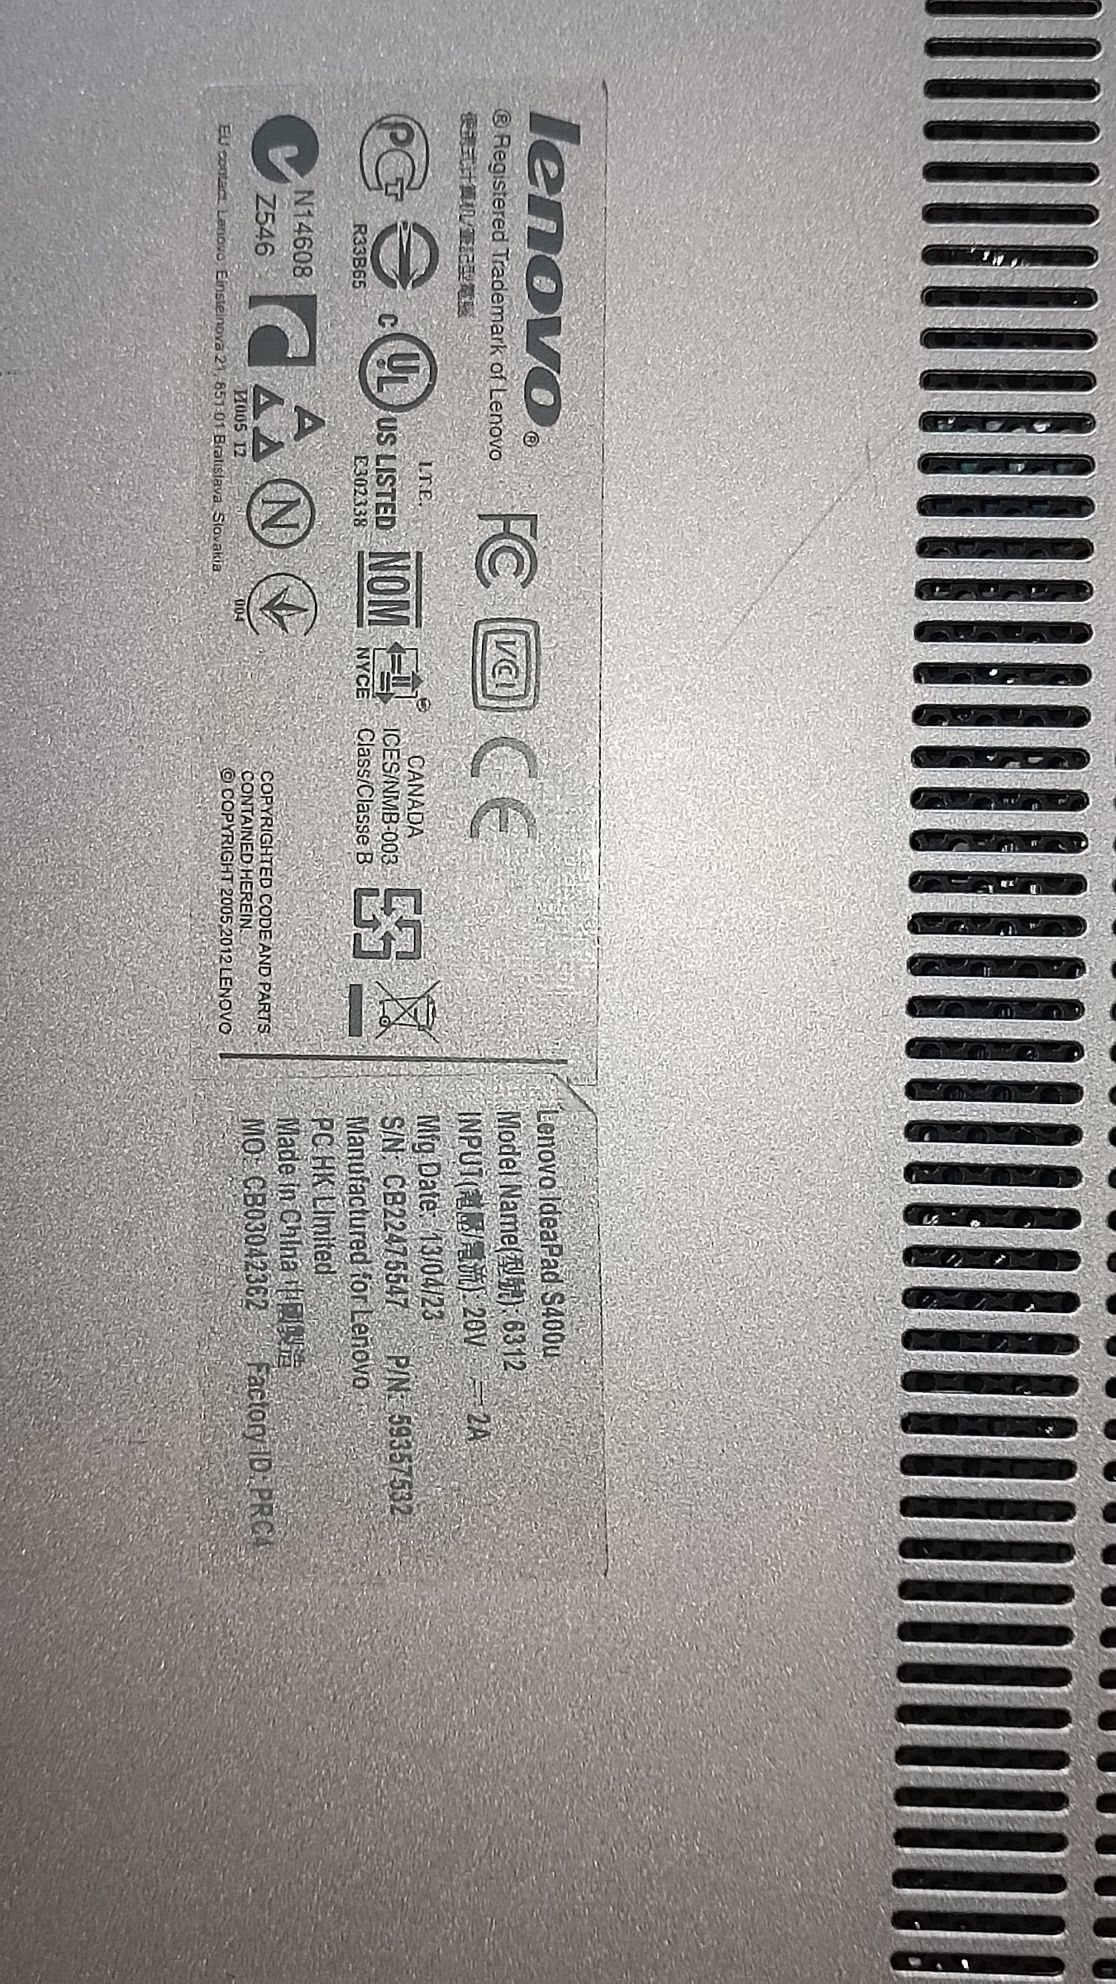 Lenovo ideapad s400u (ультрабук)